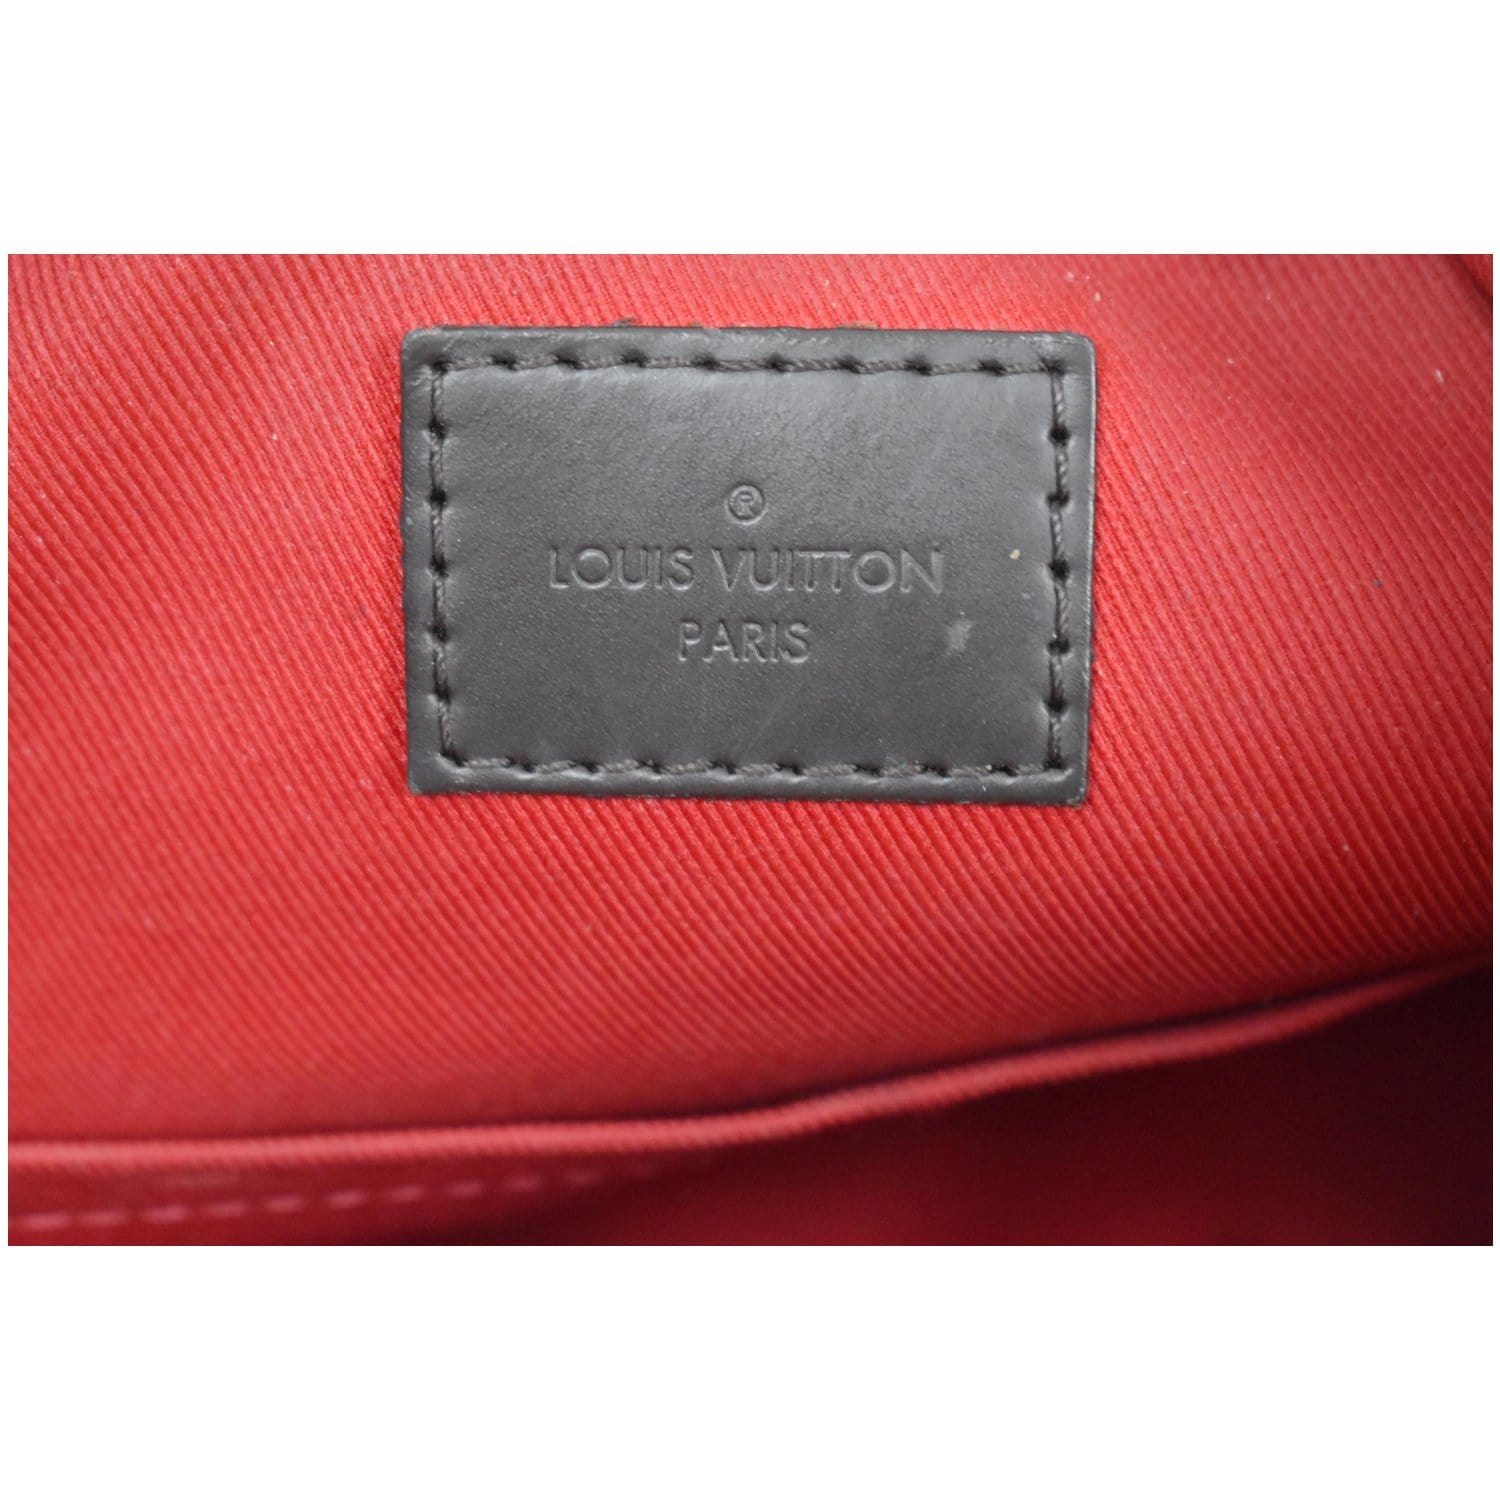 Louis Vuitton - 'South Bank Besace' Handtasche in Damier Ebene  Canvas - FULL SET